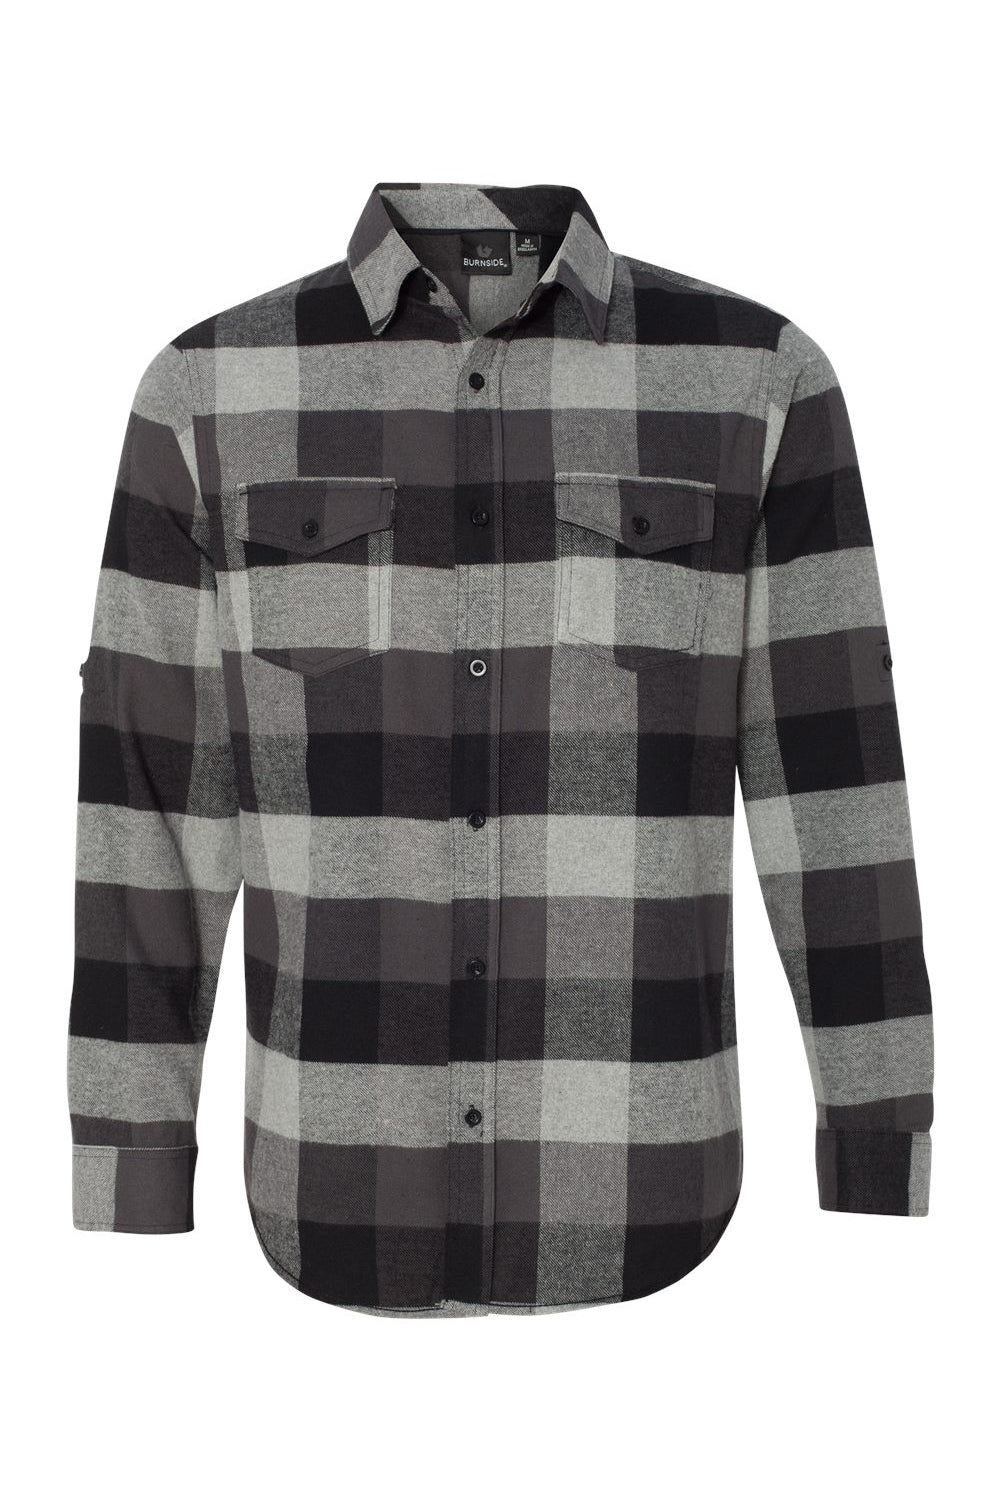 Burnside B8210/8210 Mens Flannel Long Sleeve Button Down Shirt w/ Double Pockets Black/Grey Flat Front